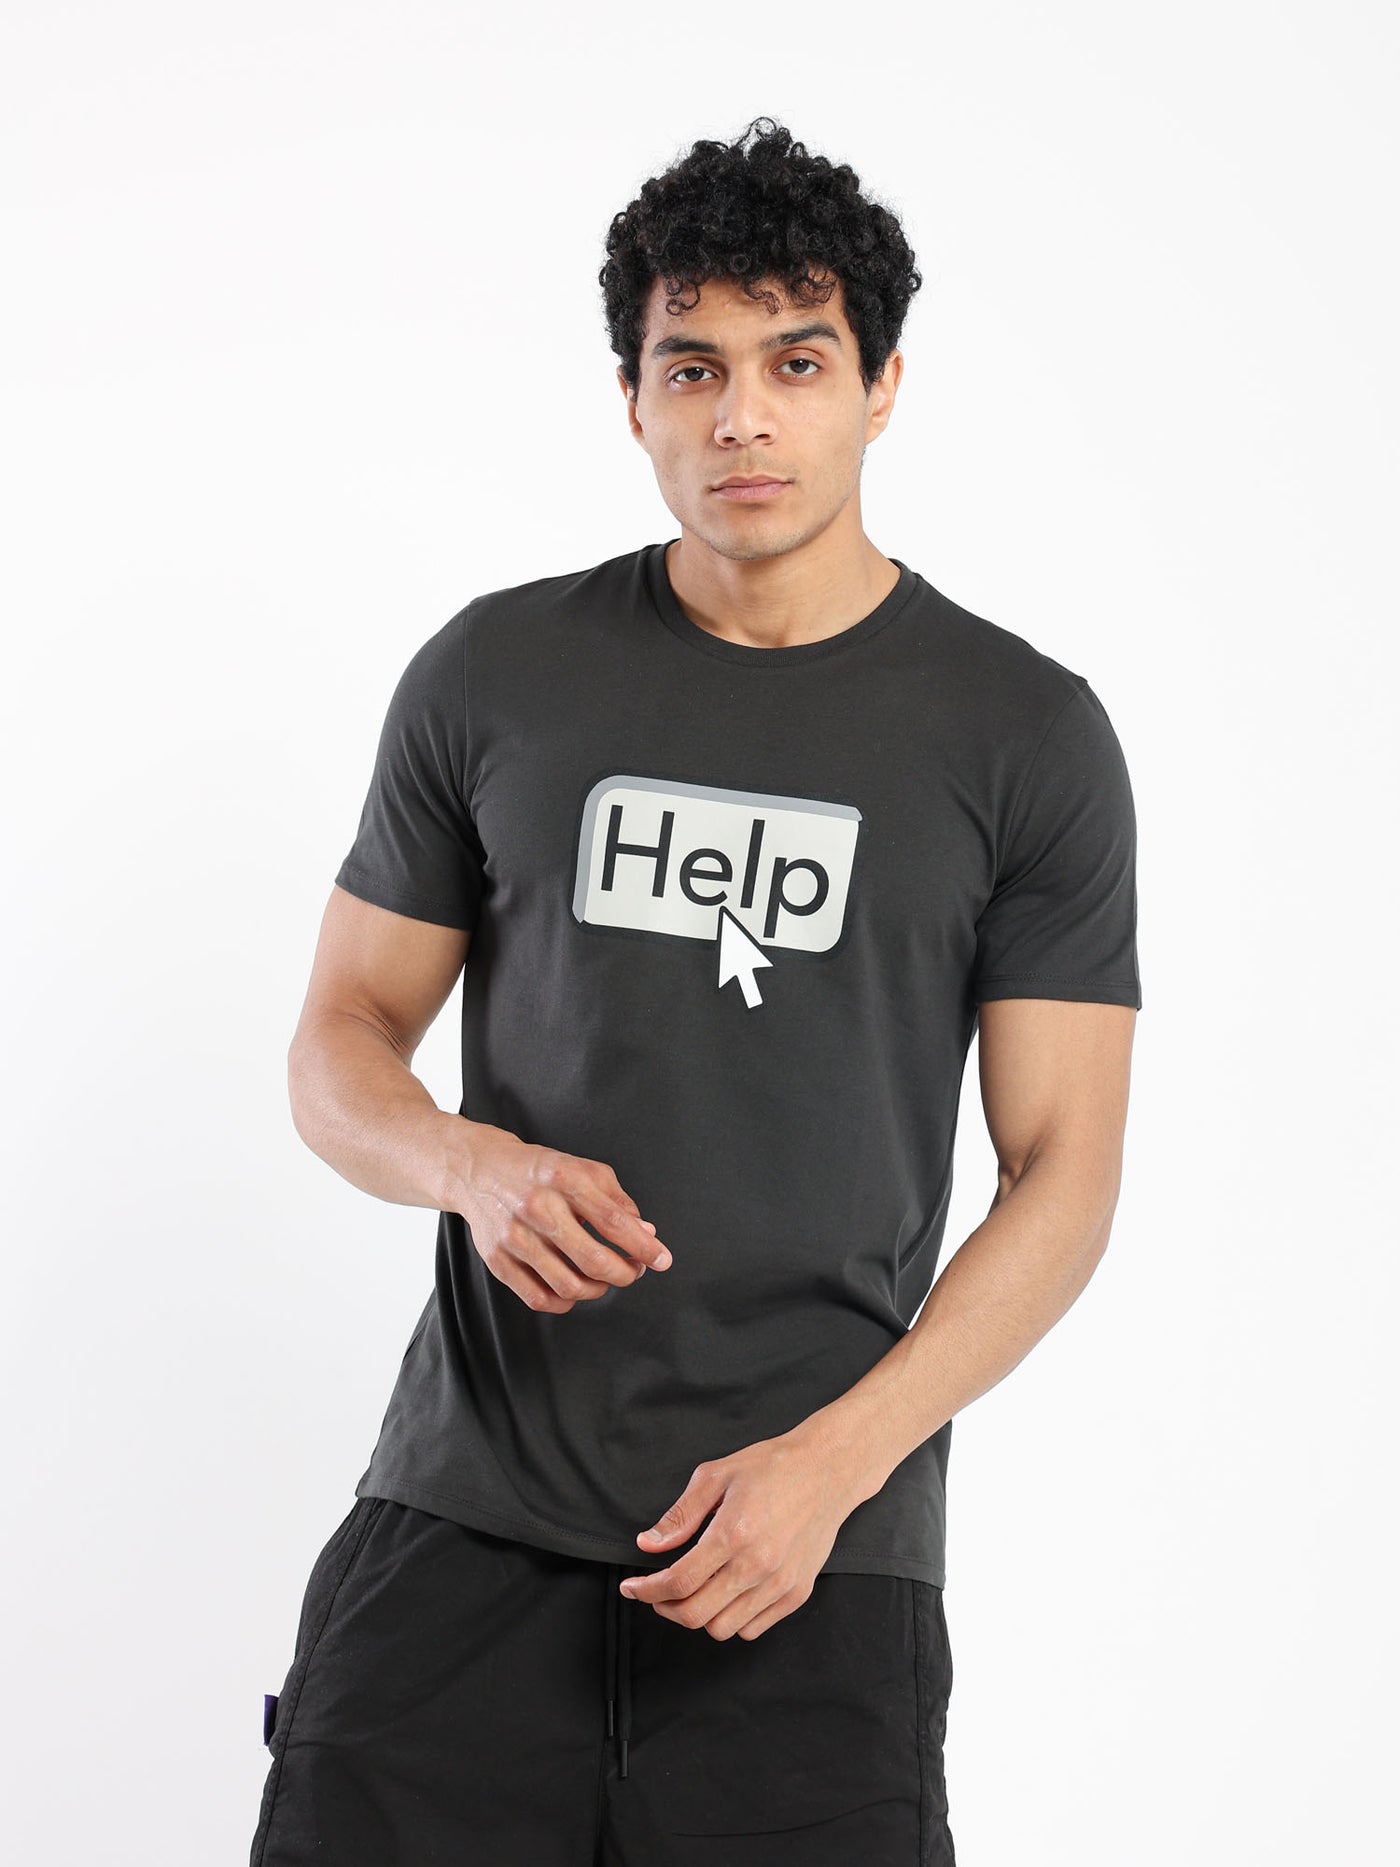 T-Shirt - "Help" Front Text Print